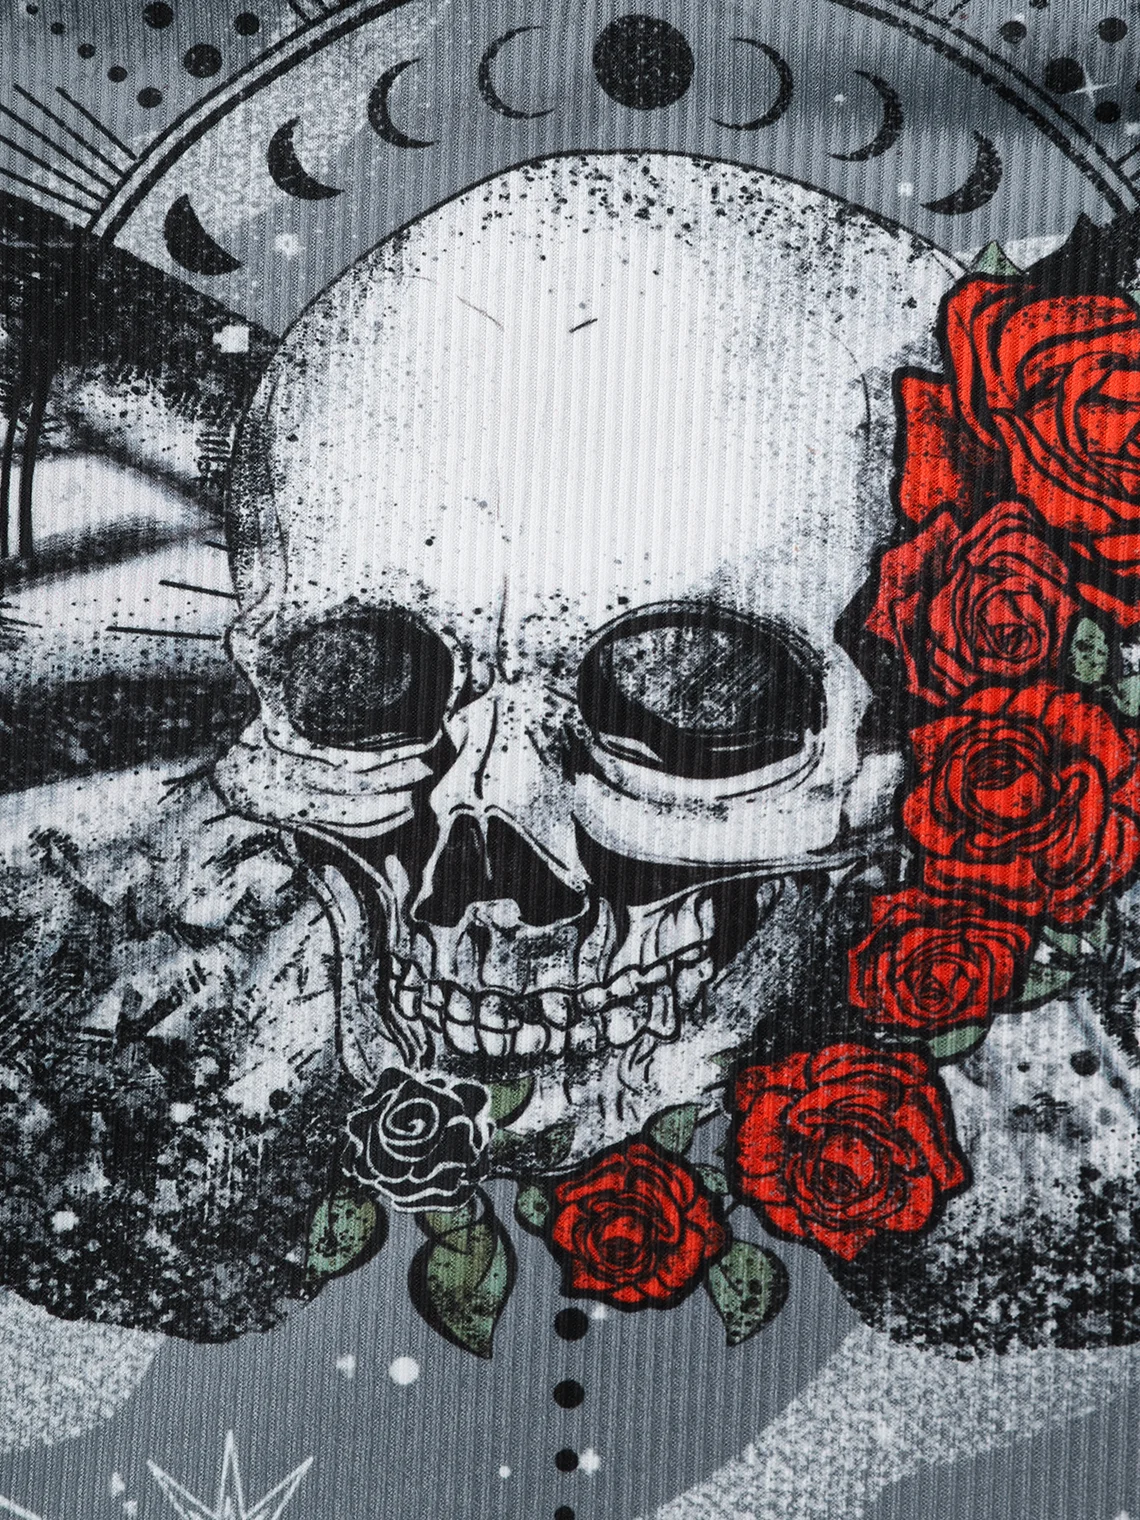 【Final Sale】Punk Gray Skull V-Neck Top T-Shirt